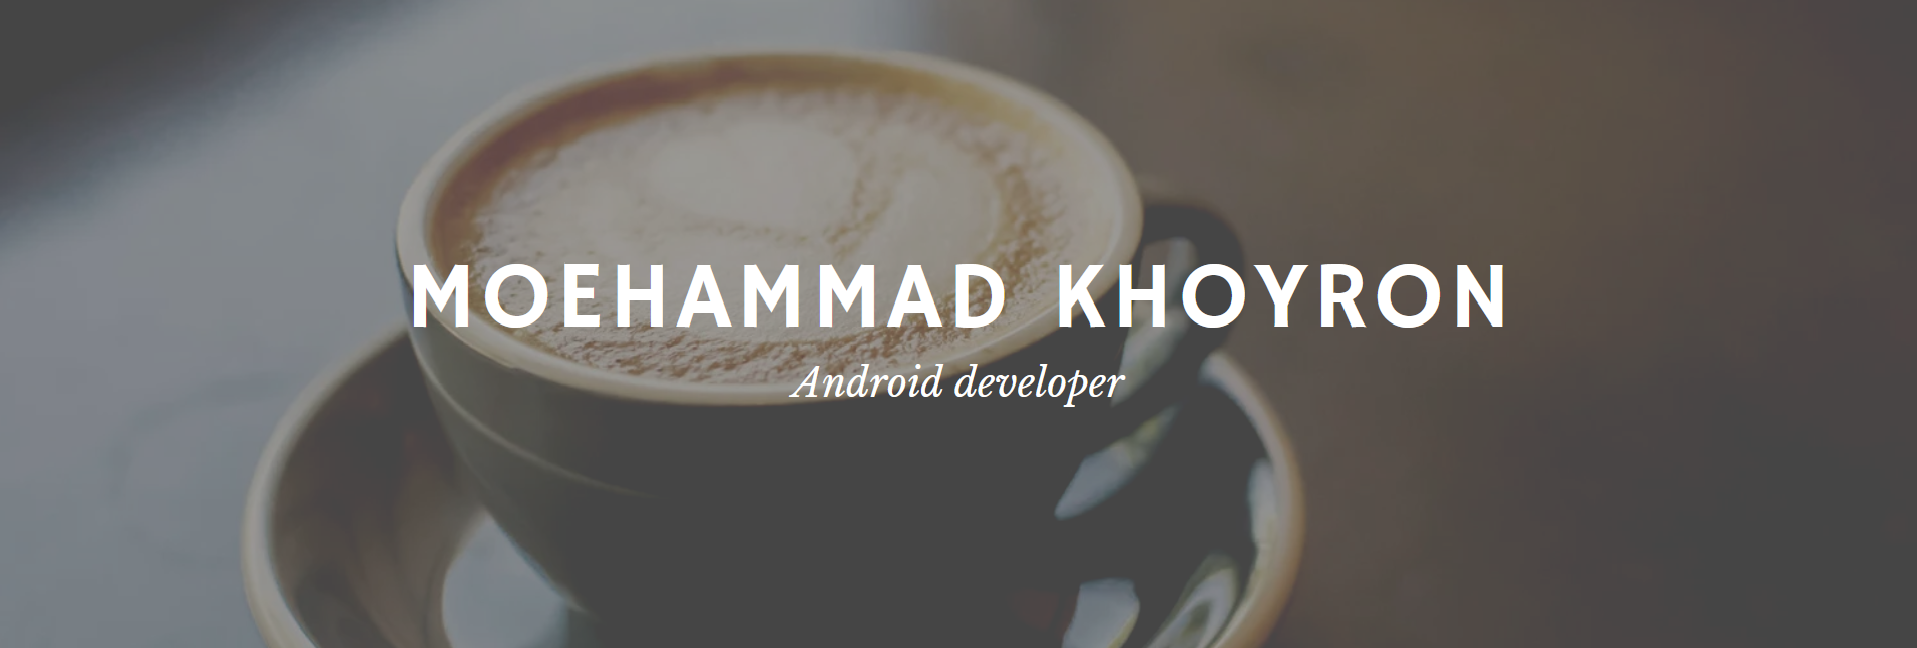 banner that says Moehammad khoyron - Android developer, kotlin enthusiast